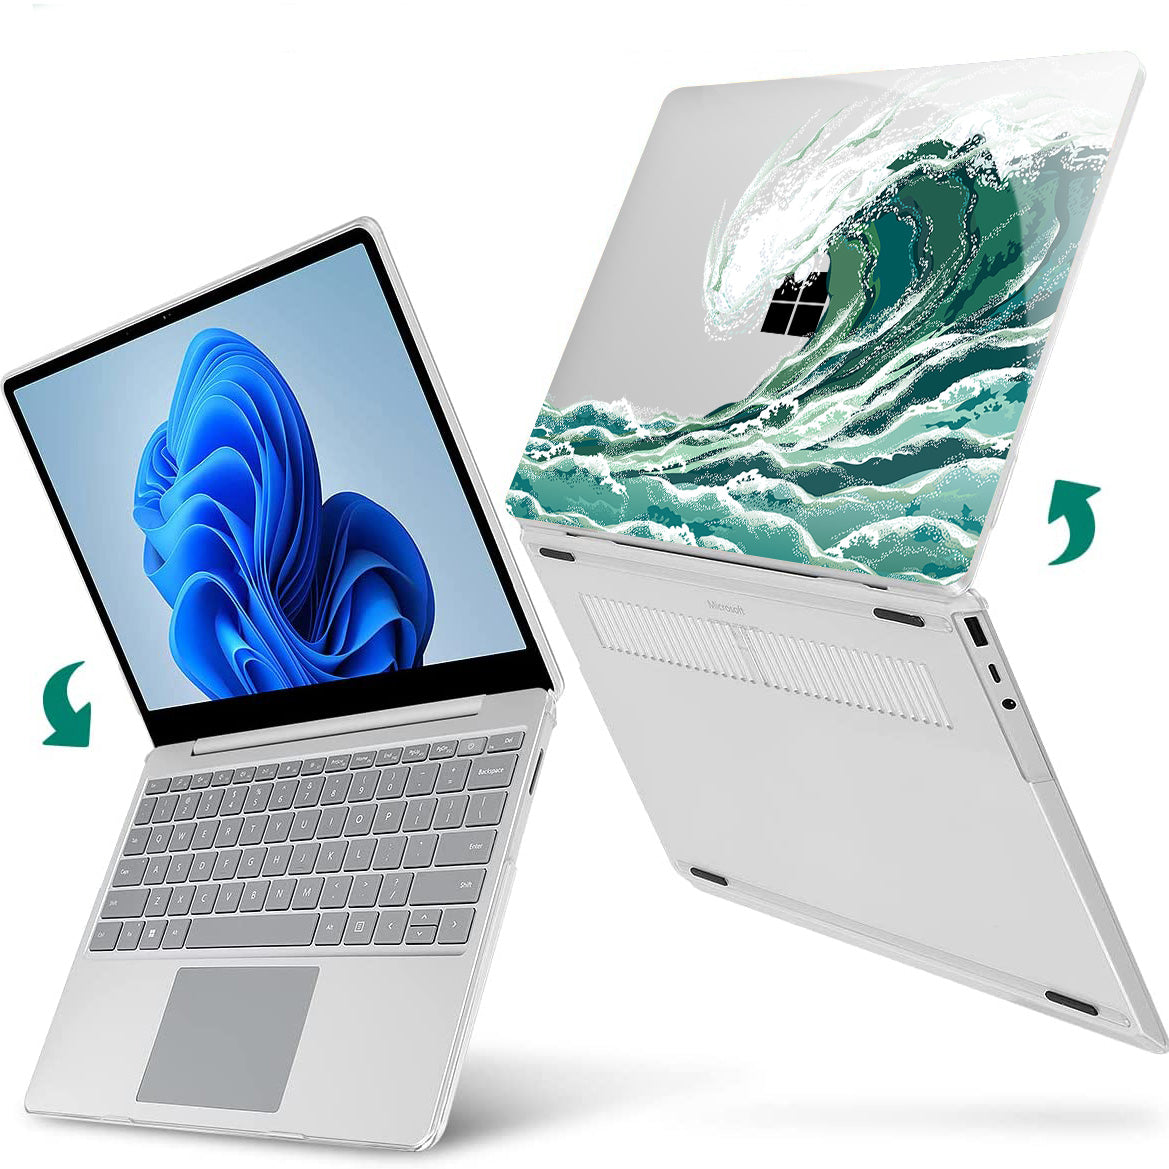 Big Waves Microsoft Surface Laptop Case